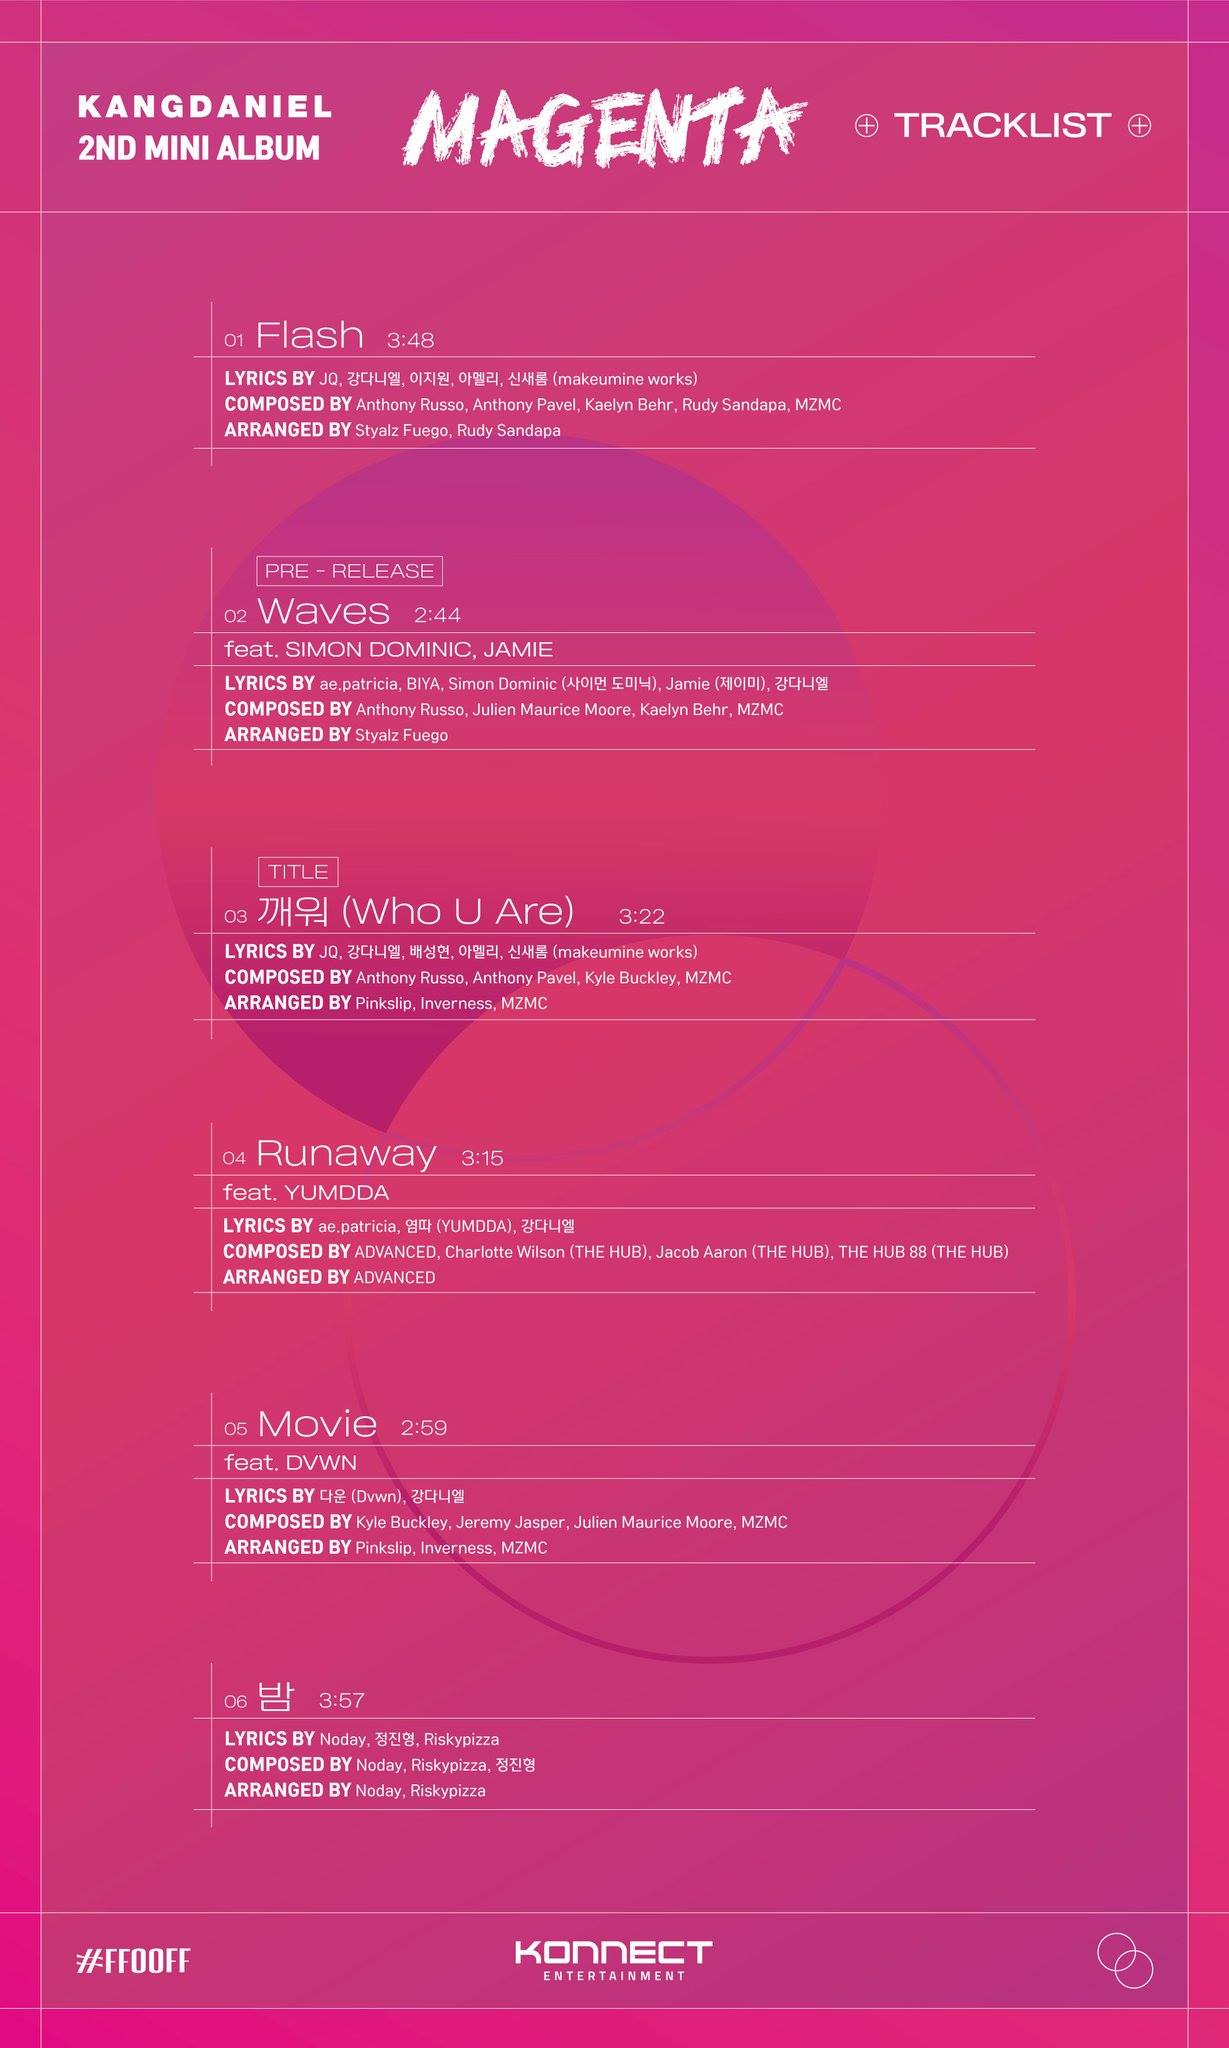 Upcoming K-pop Comebacks - Kang Daniel Magenta Album Tracklist